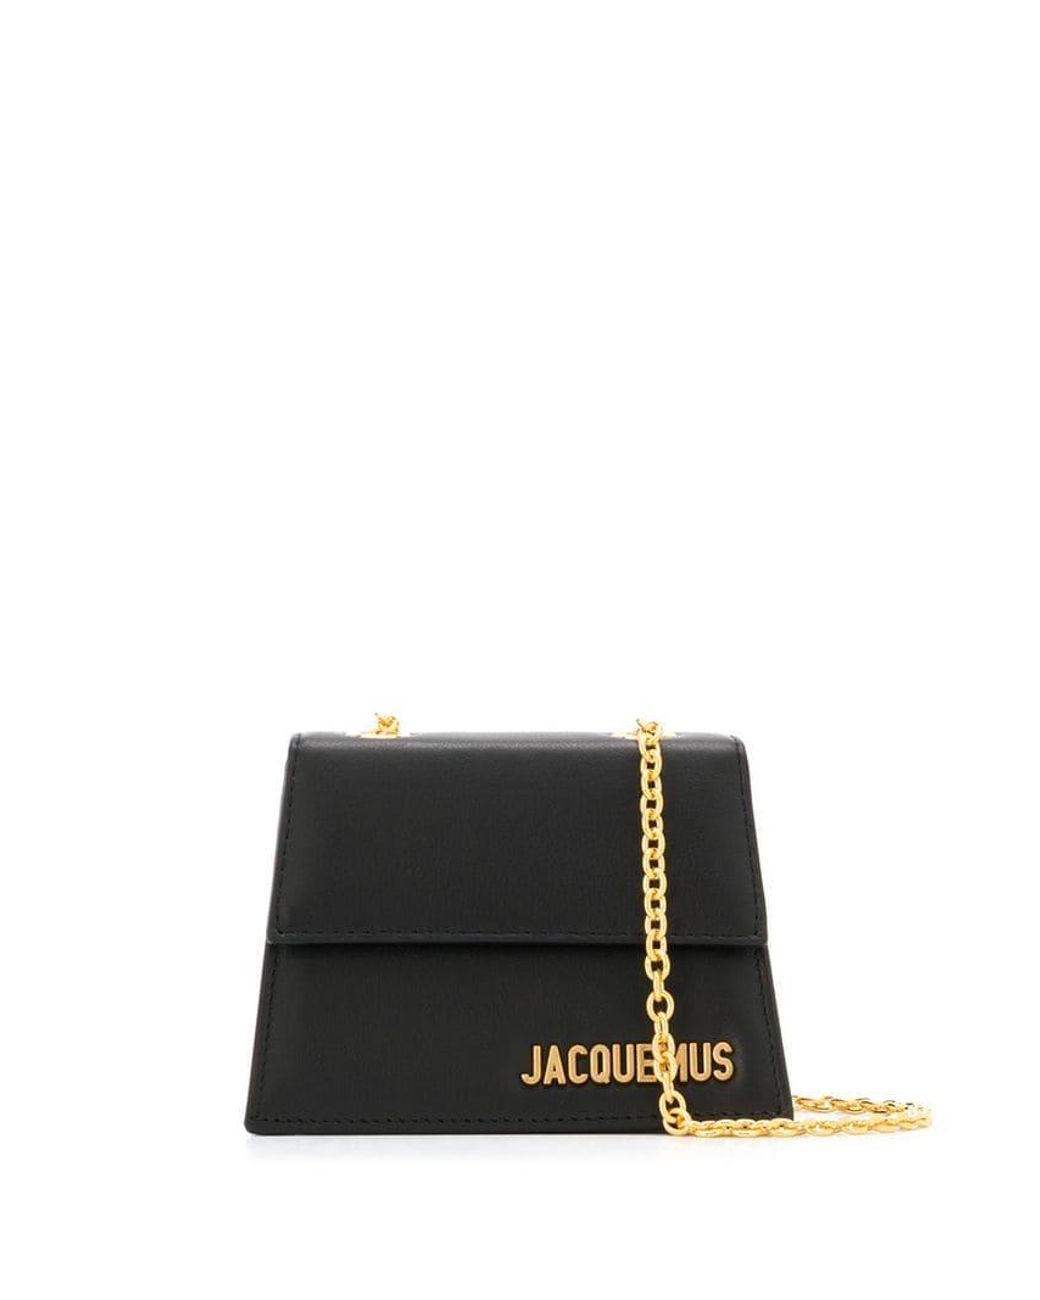 Jacquemus Mini Chain Cross Body Bag in Black | Lyst